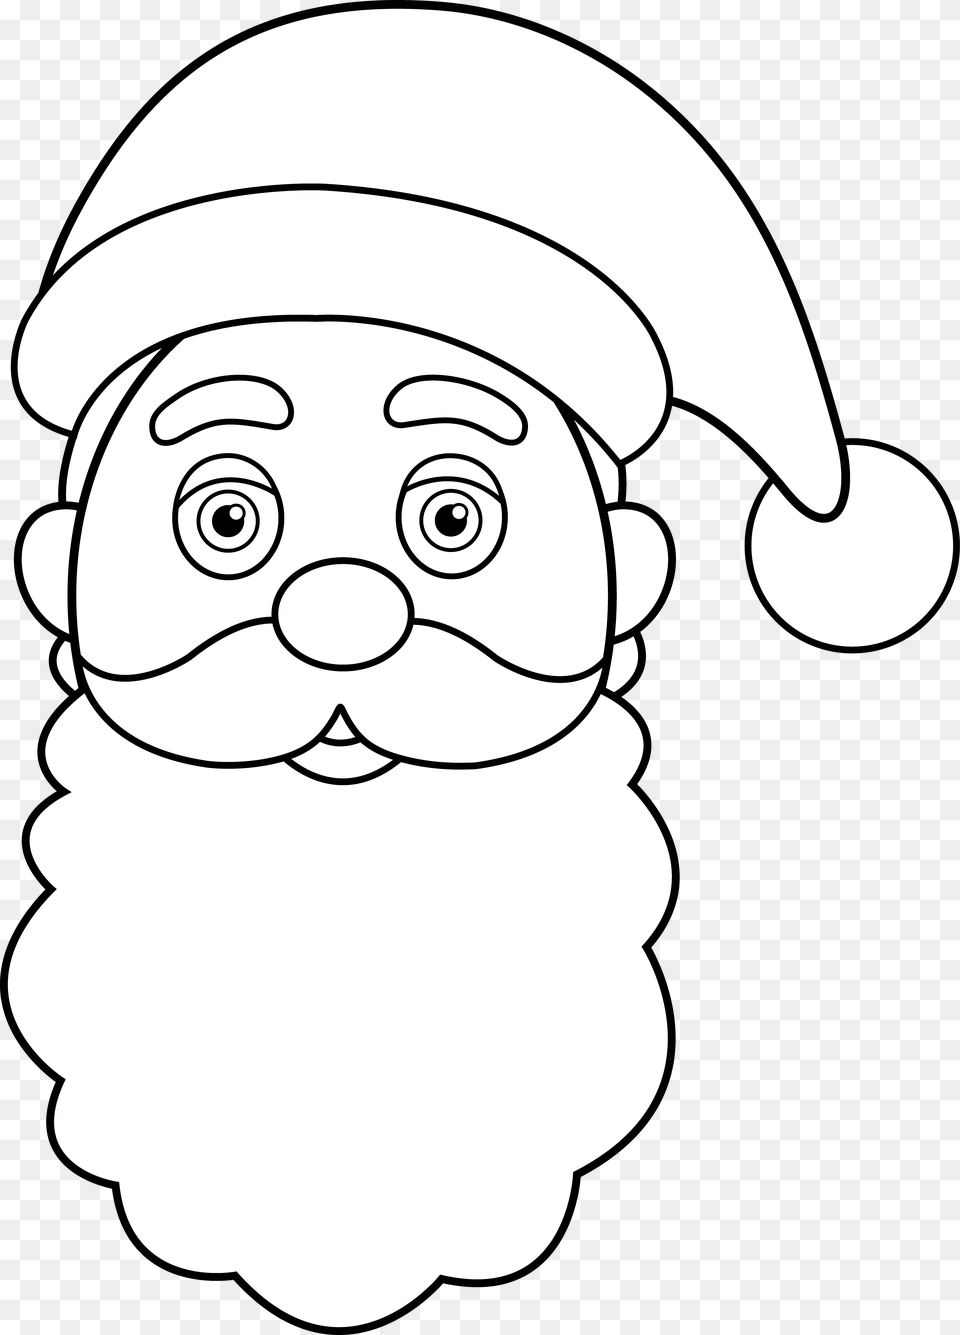 Royalty Free Line Art Of Santa Claus Free Clip Santa Claus Face, Drawing, Baby, Person, Head Png Image